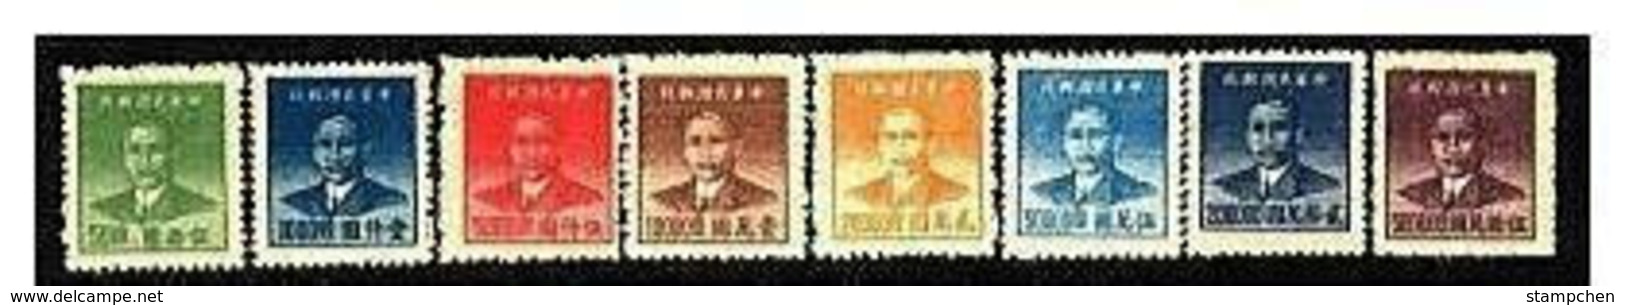 Rep China 1949 Sun Yat-sen Gold Yuan Hwa Nan Print Stamps D62 SYS - Ongebruikt